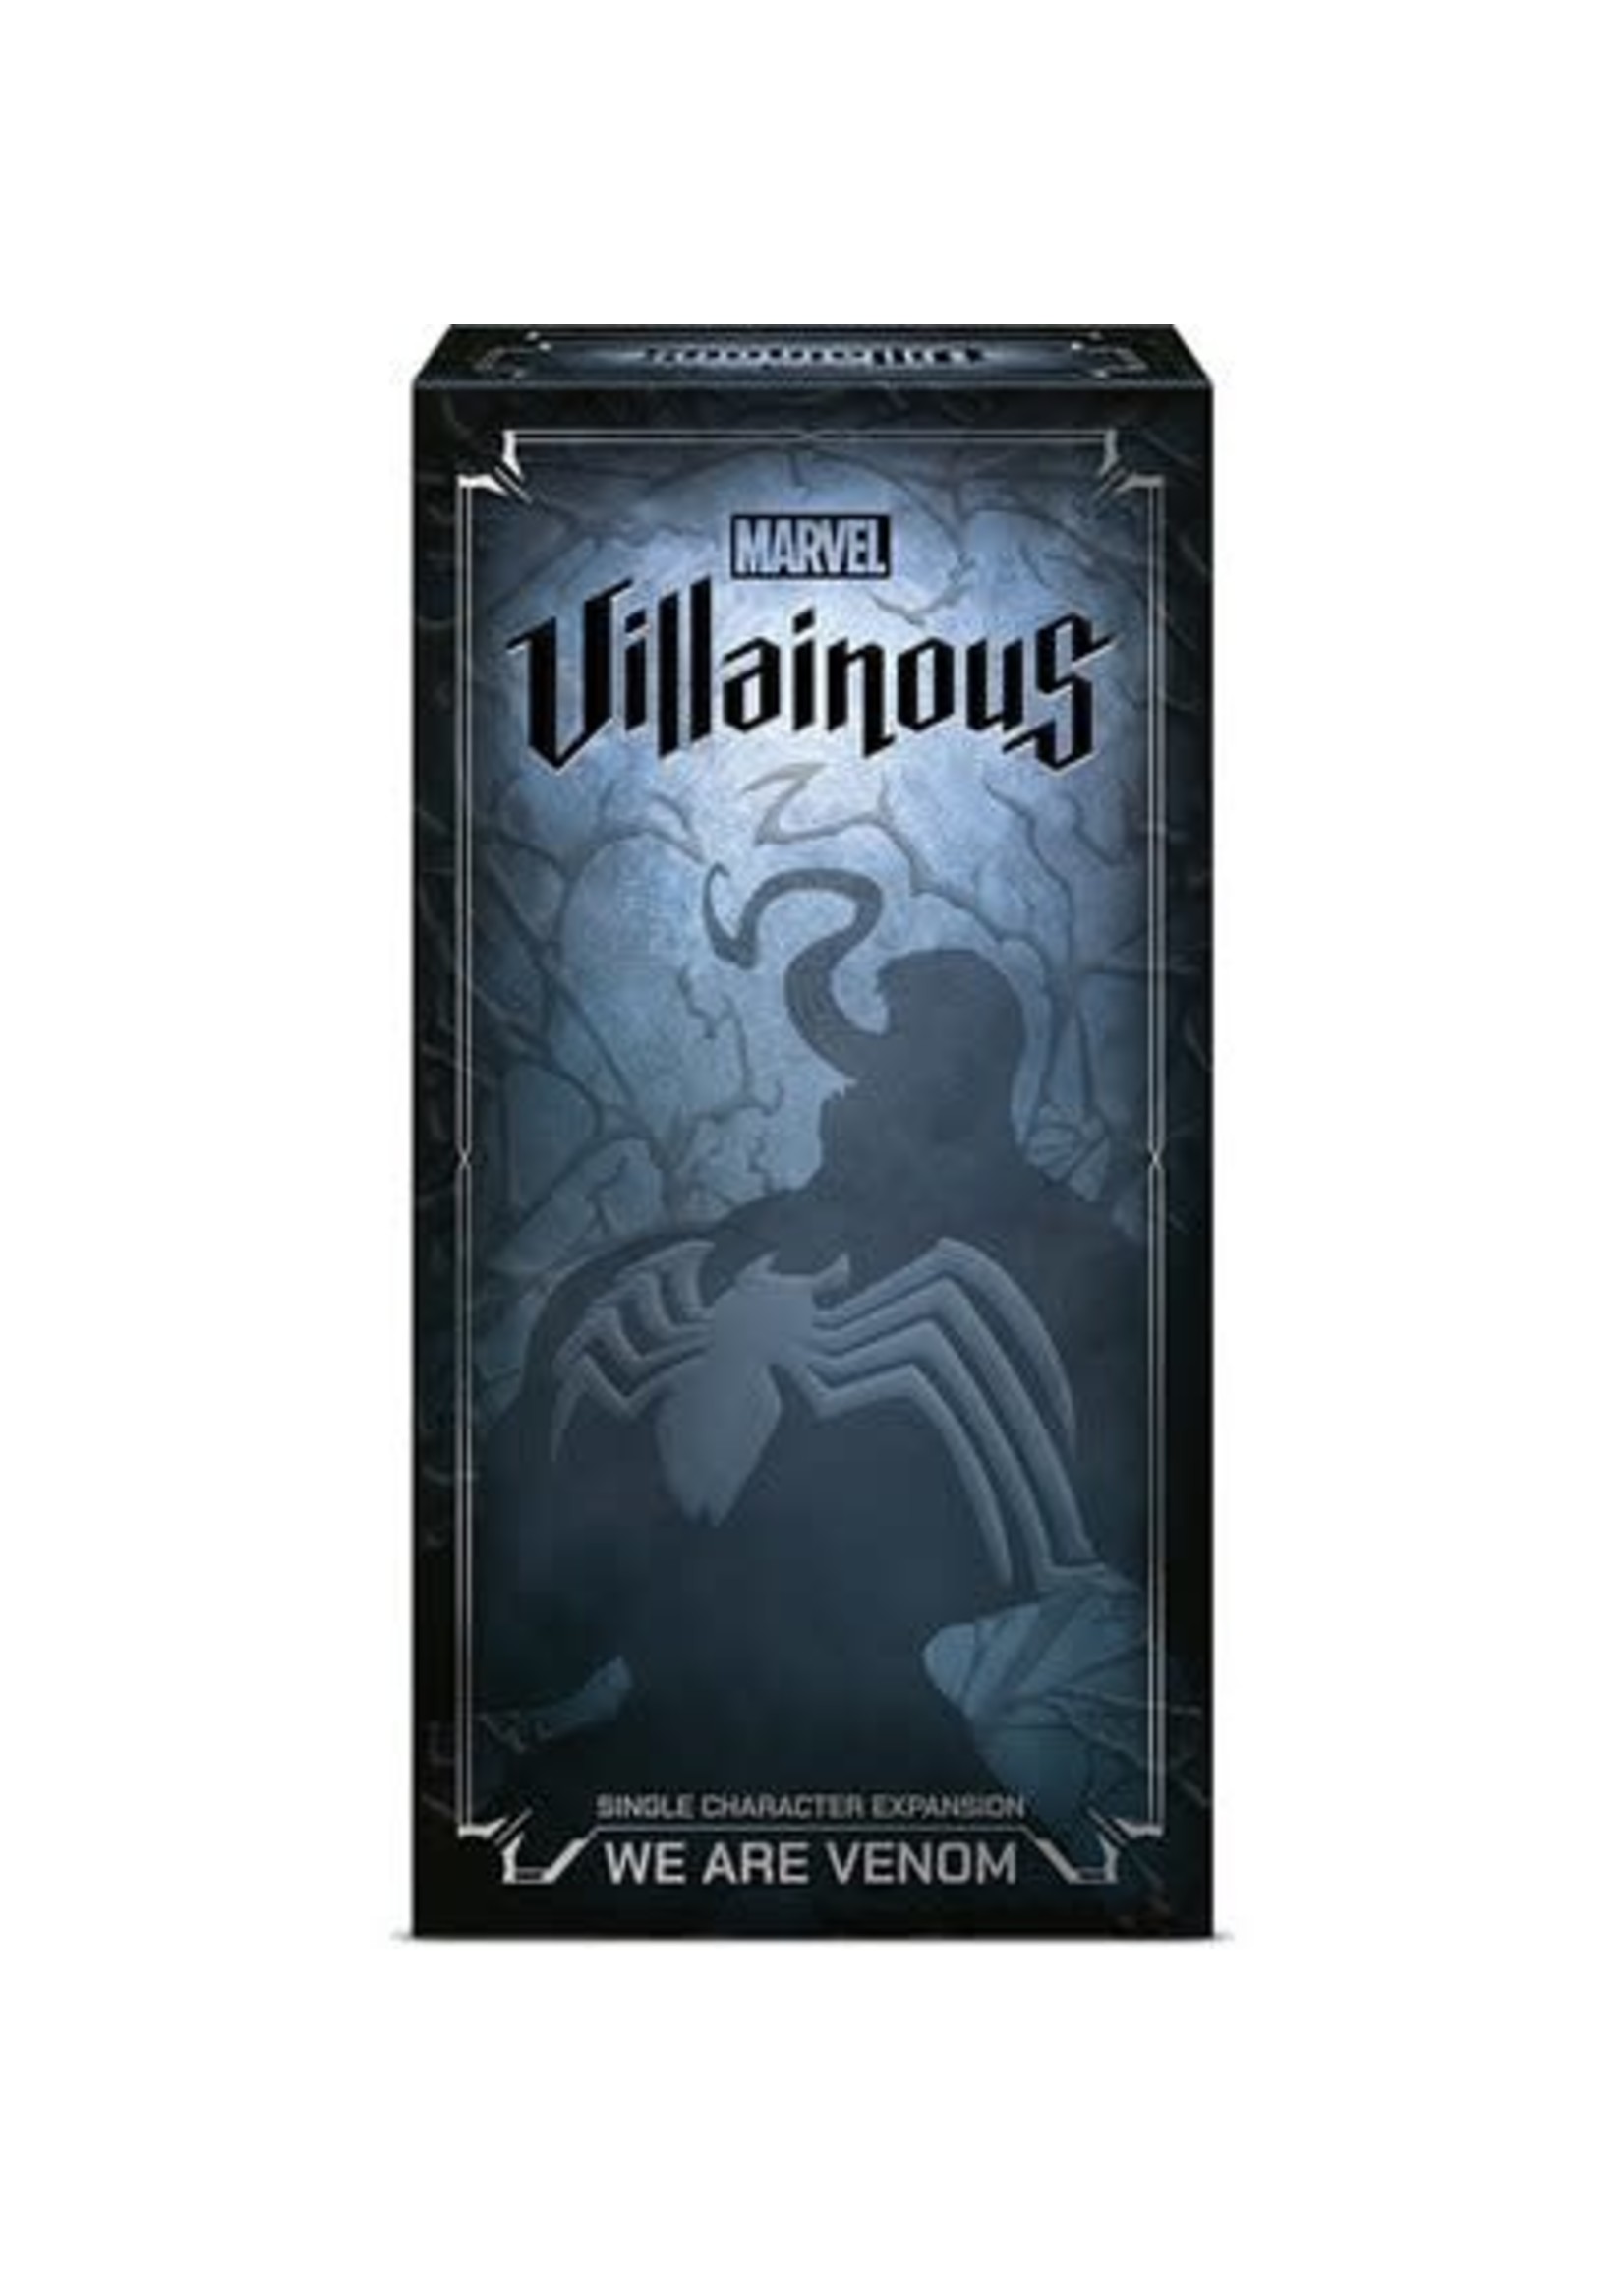 Ravensburger Villainous Marvel - We are venom expansion (EN)